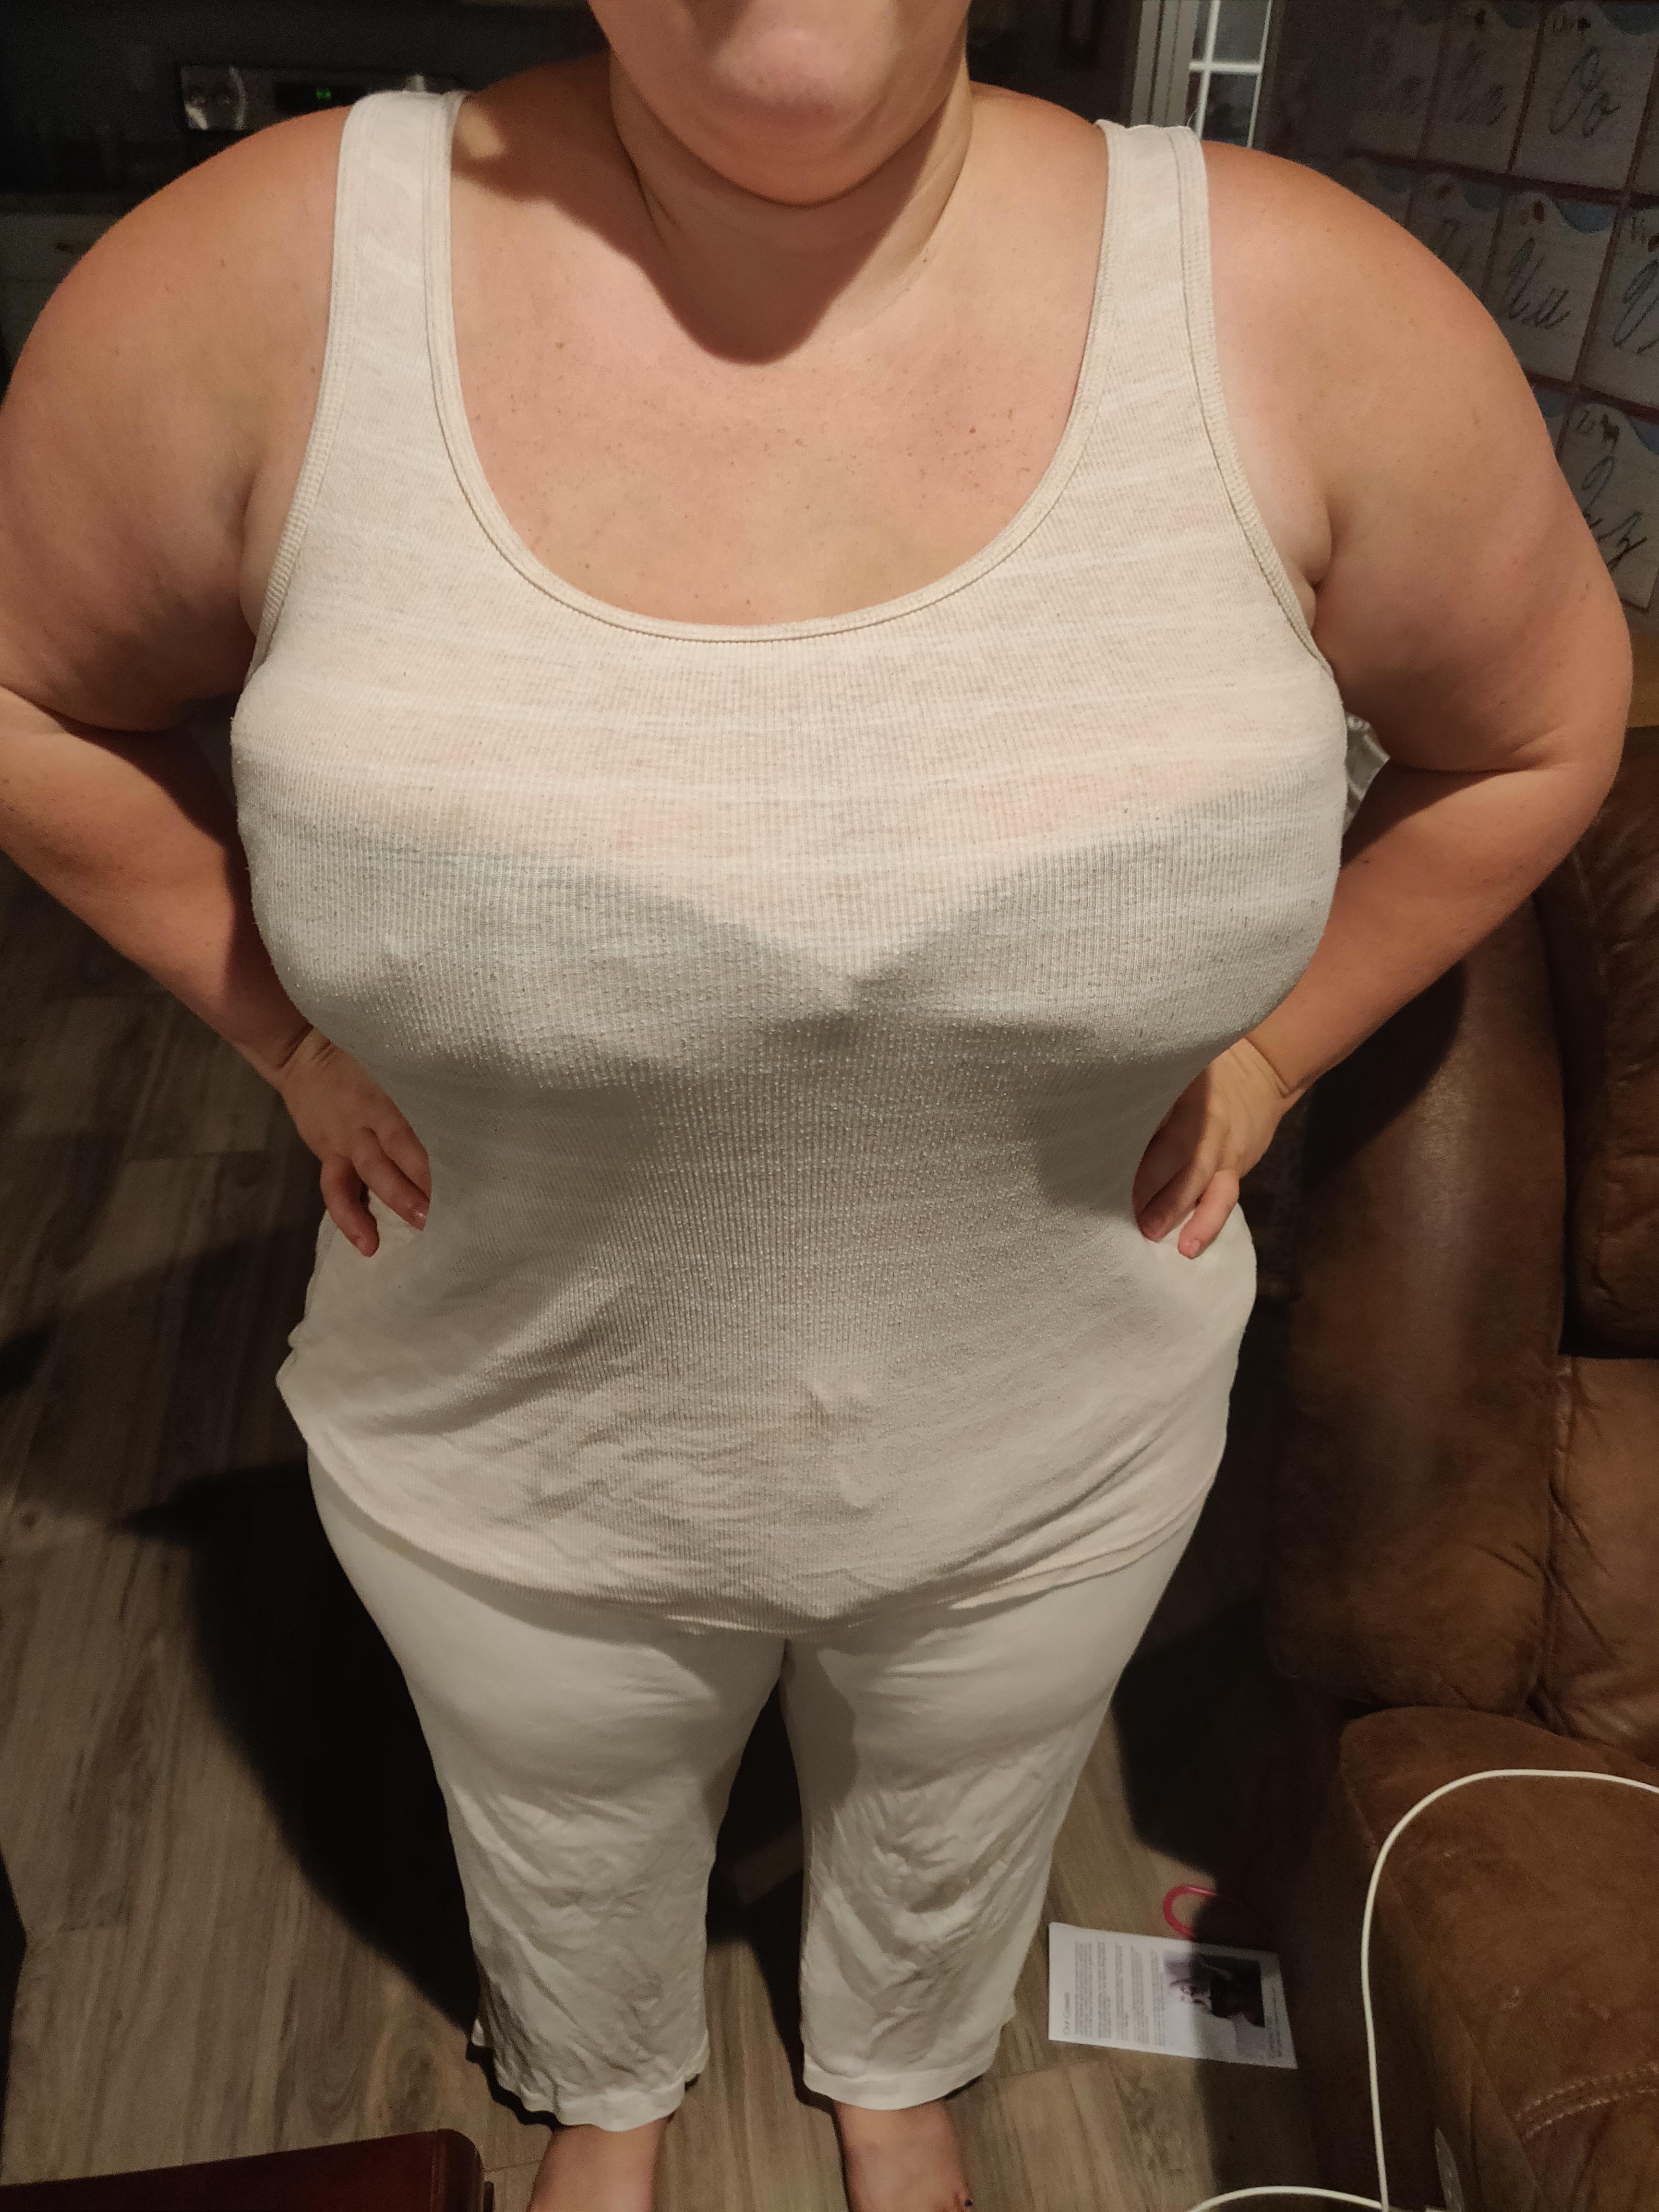 https://yocto.scrolller.com/what-would-help-hide-my-new-corset-under-my-2iu1k2ejul.jpg